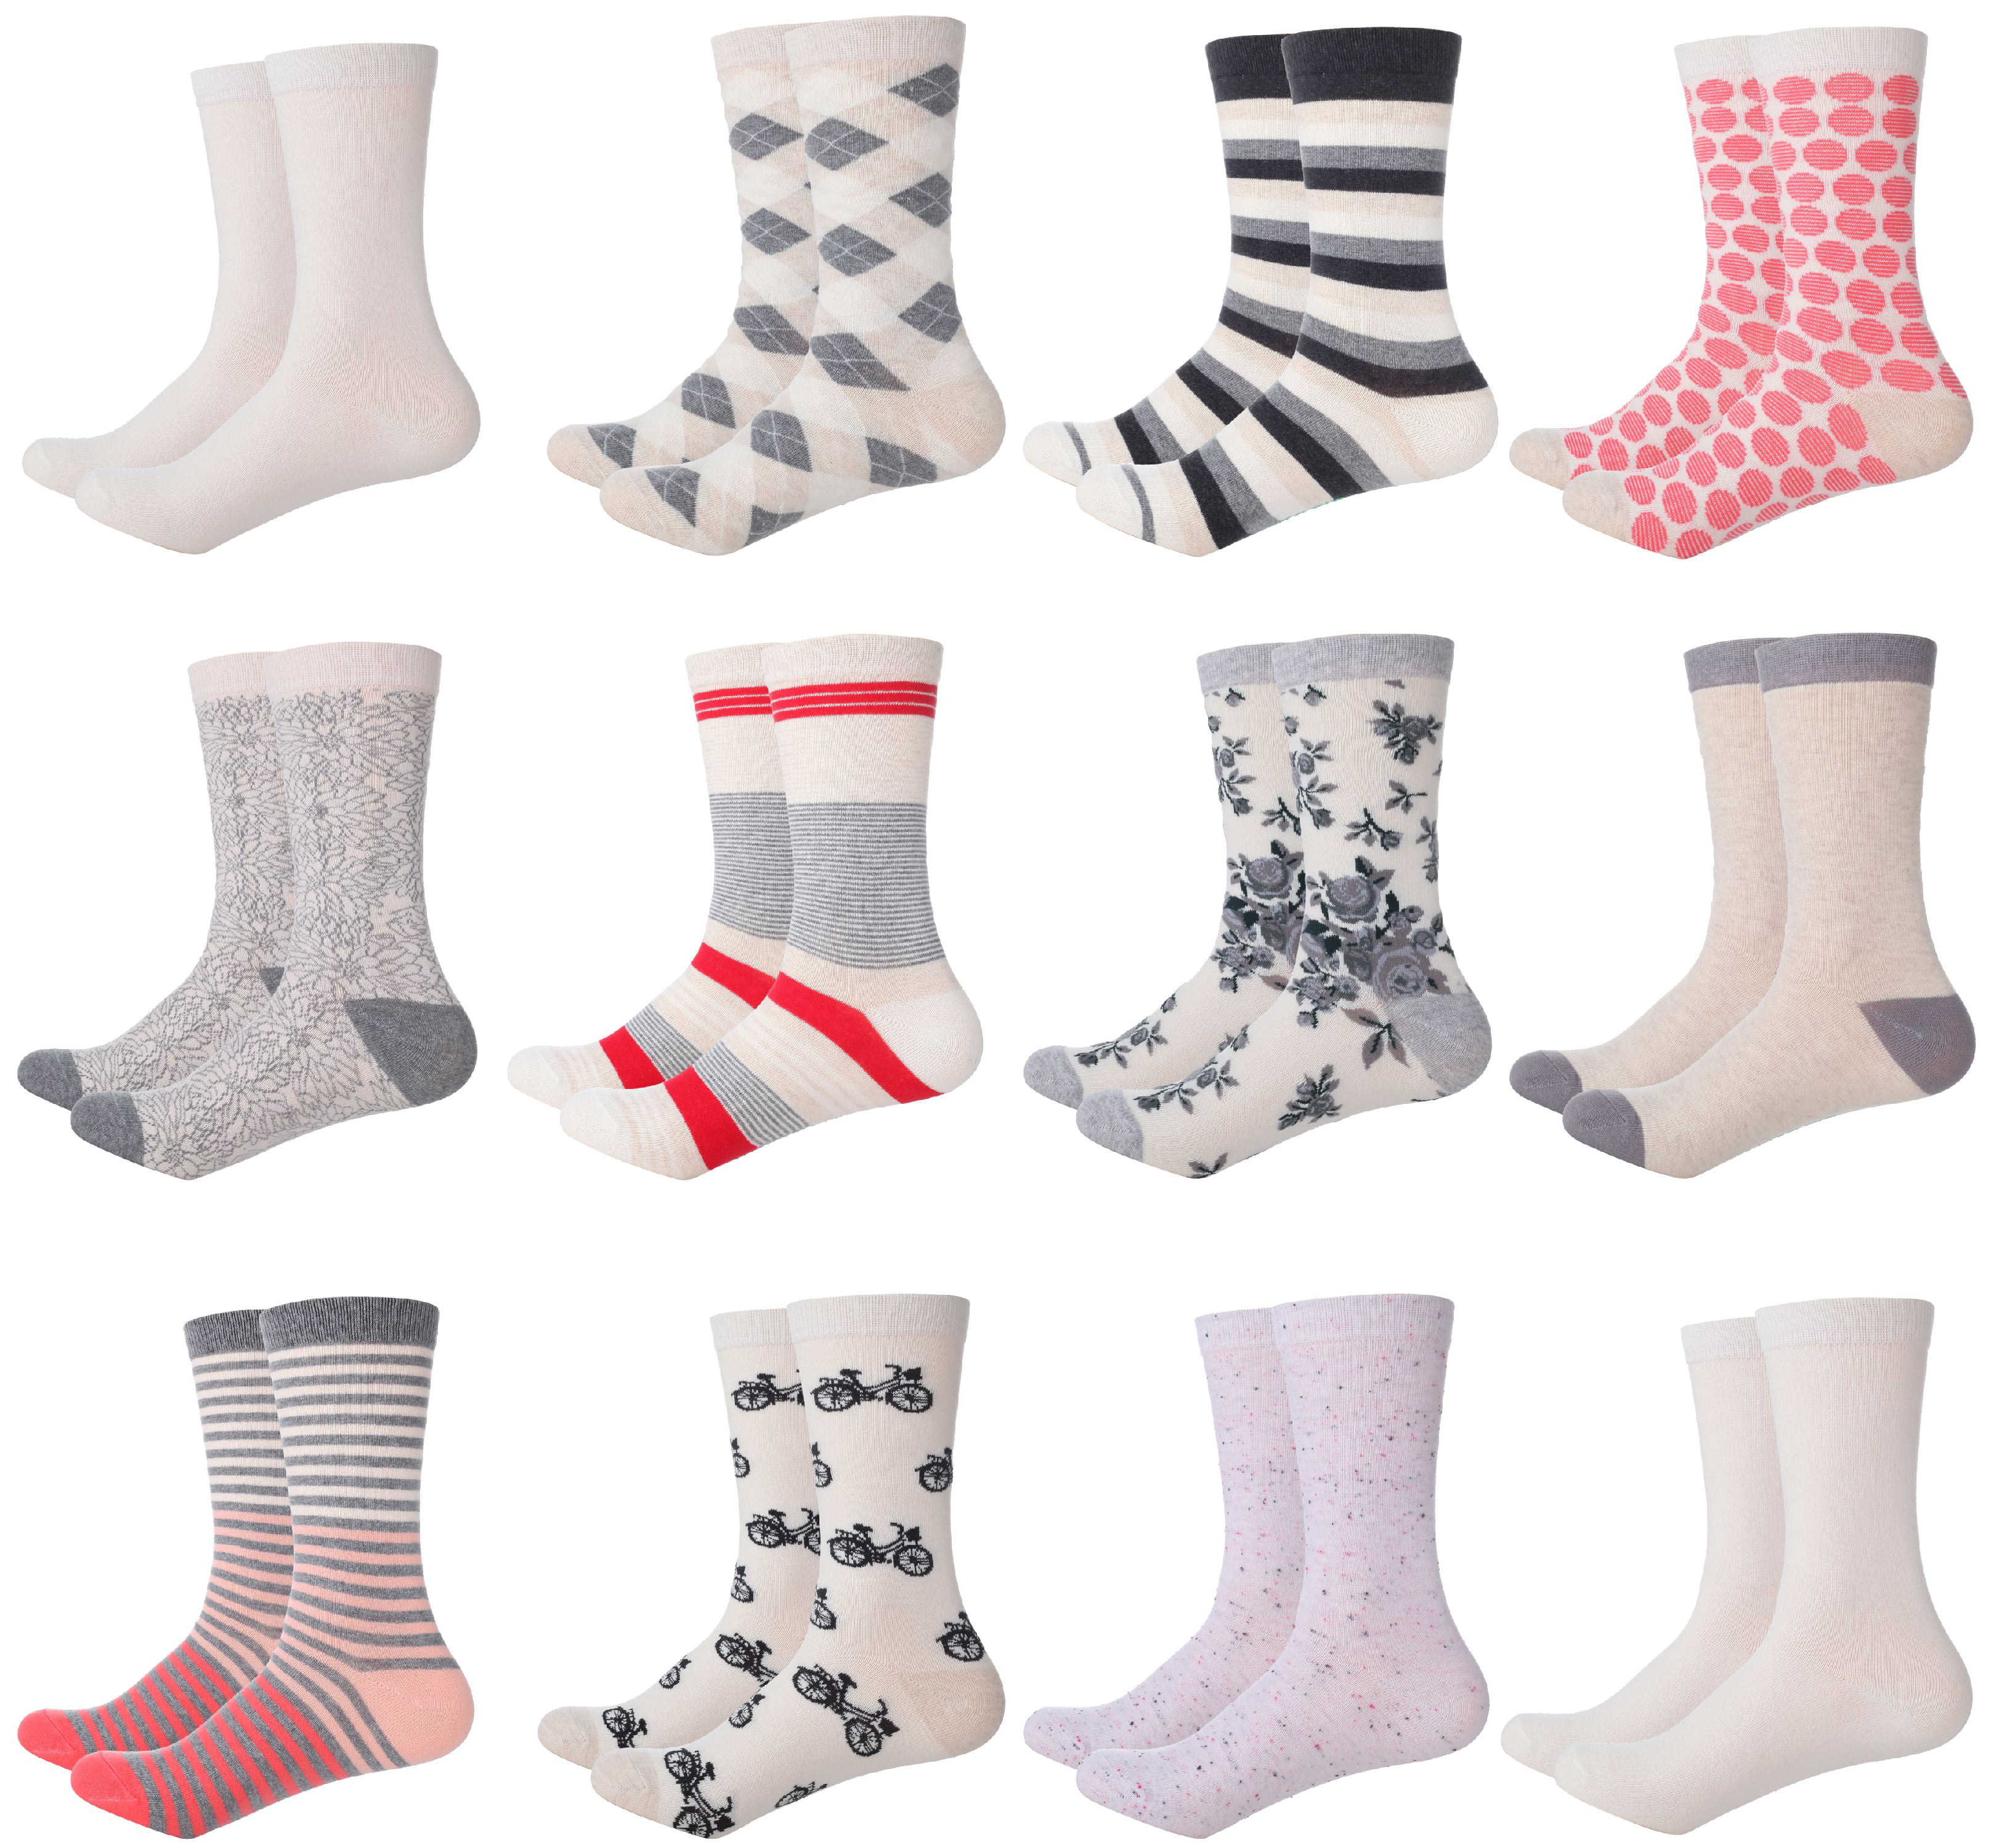 Mio Marino Womens Dress Socks - Colorful Patterned Socks for Women - 12 ...